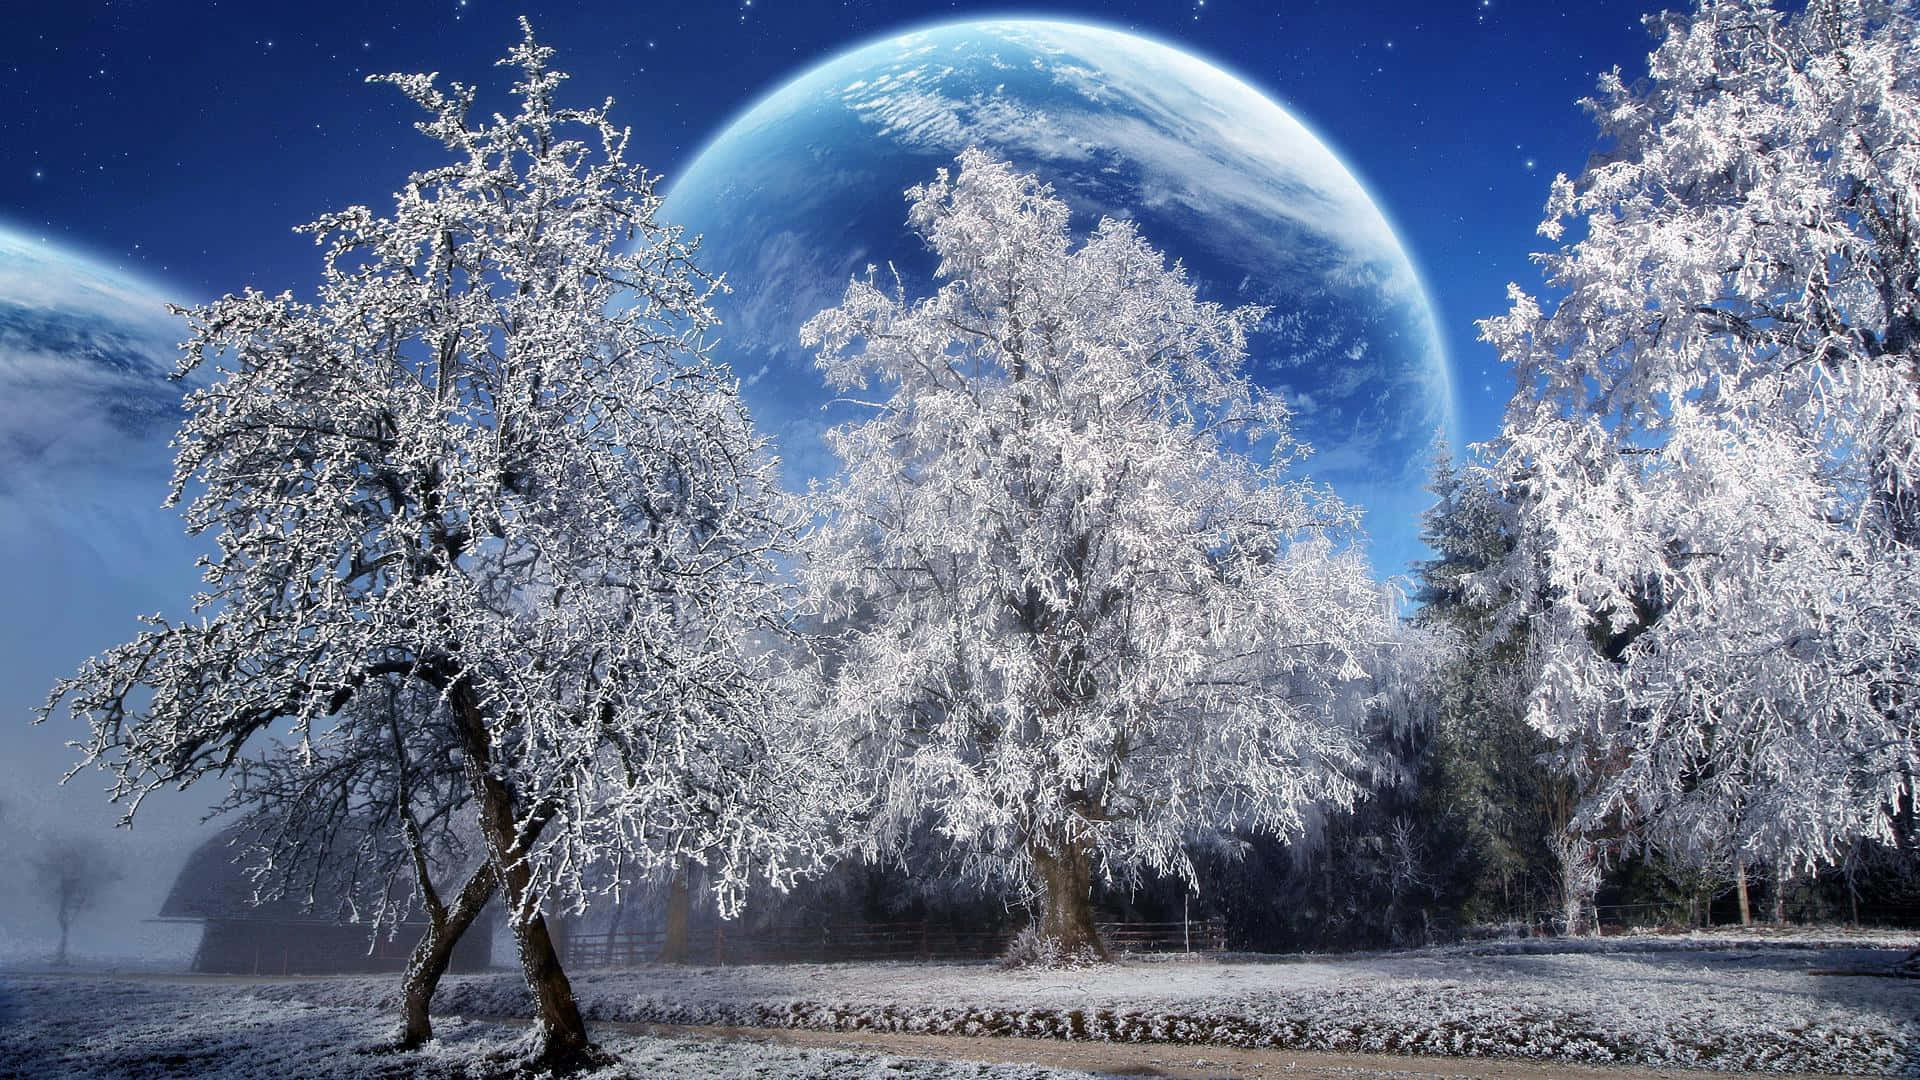 Hd Winter Background Landscape With Planet Digital Art Background